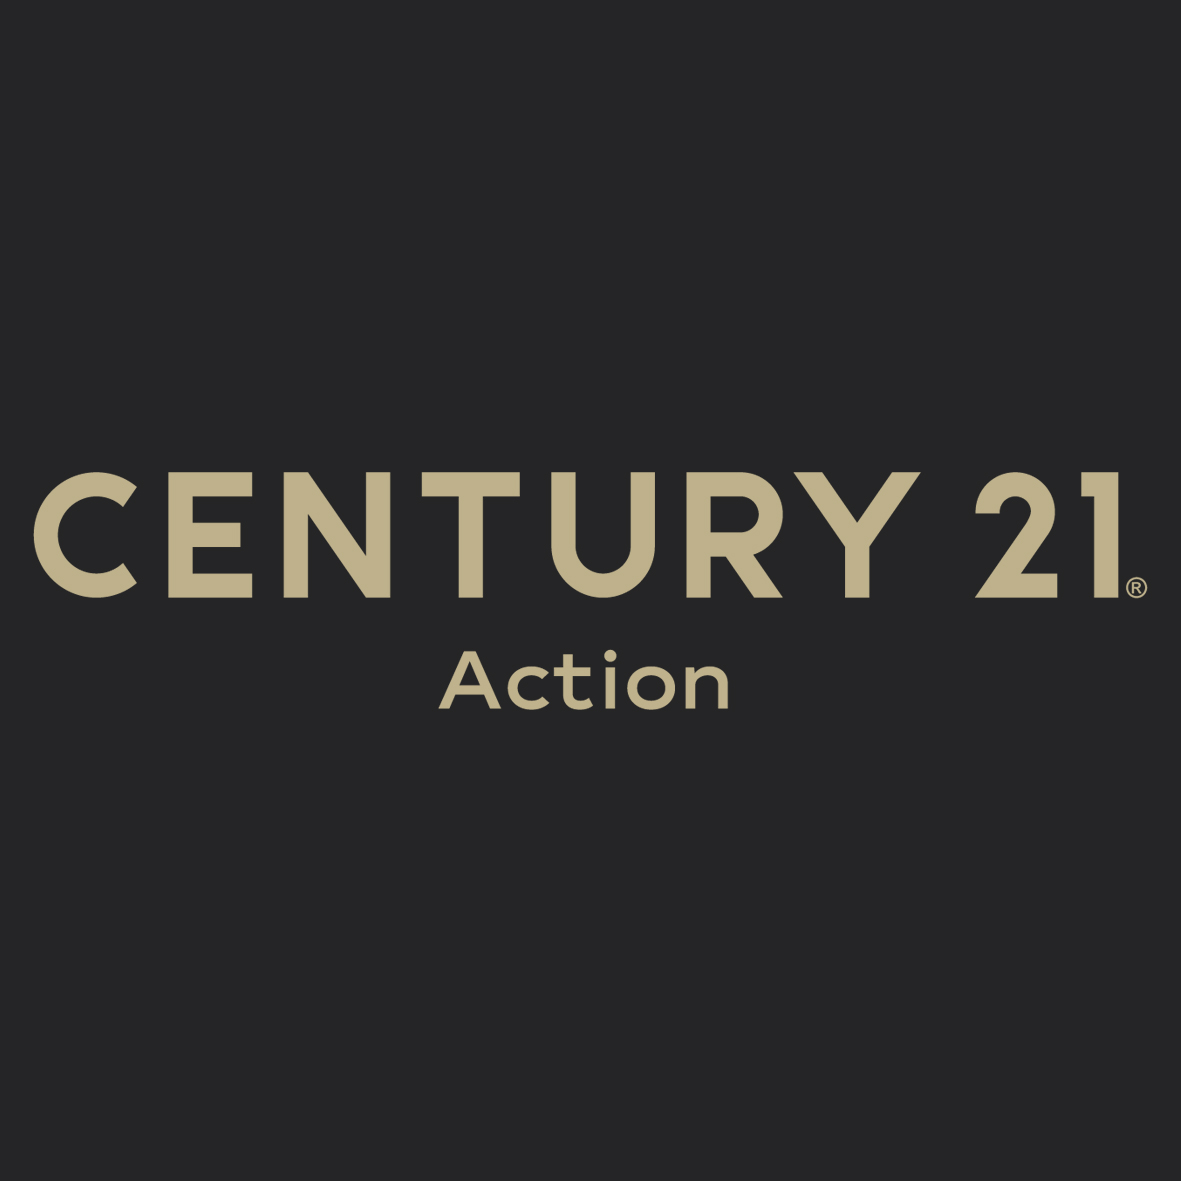 CENTURY 21 Action